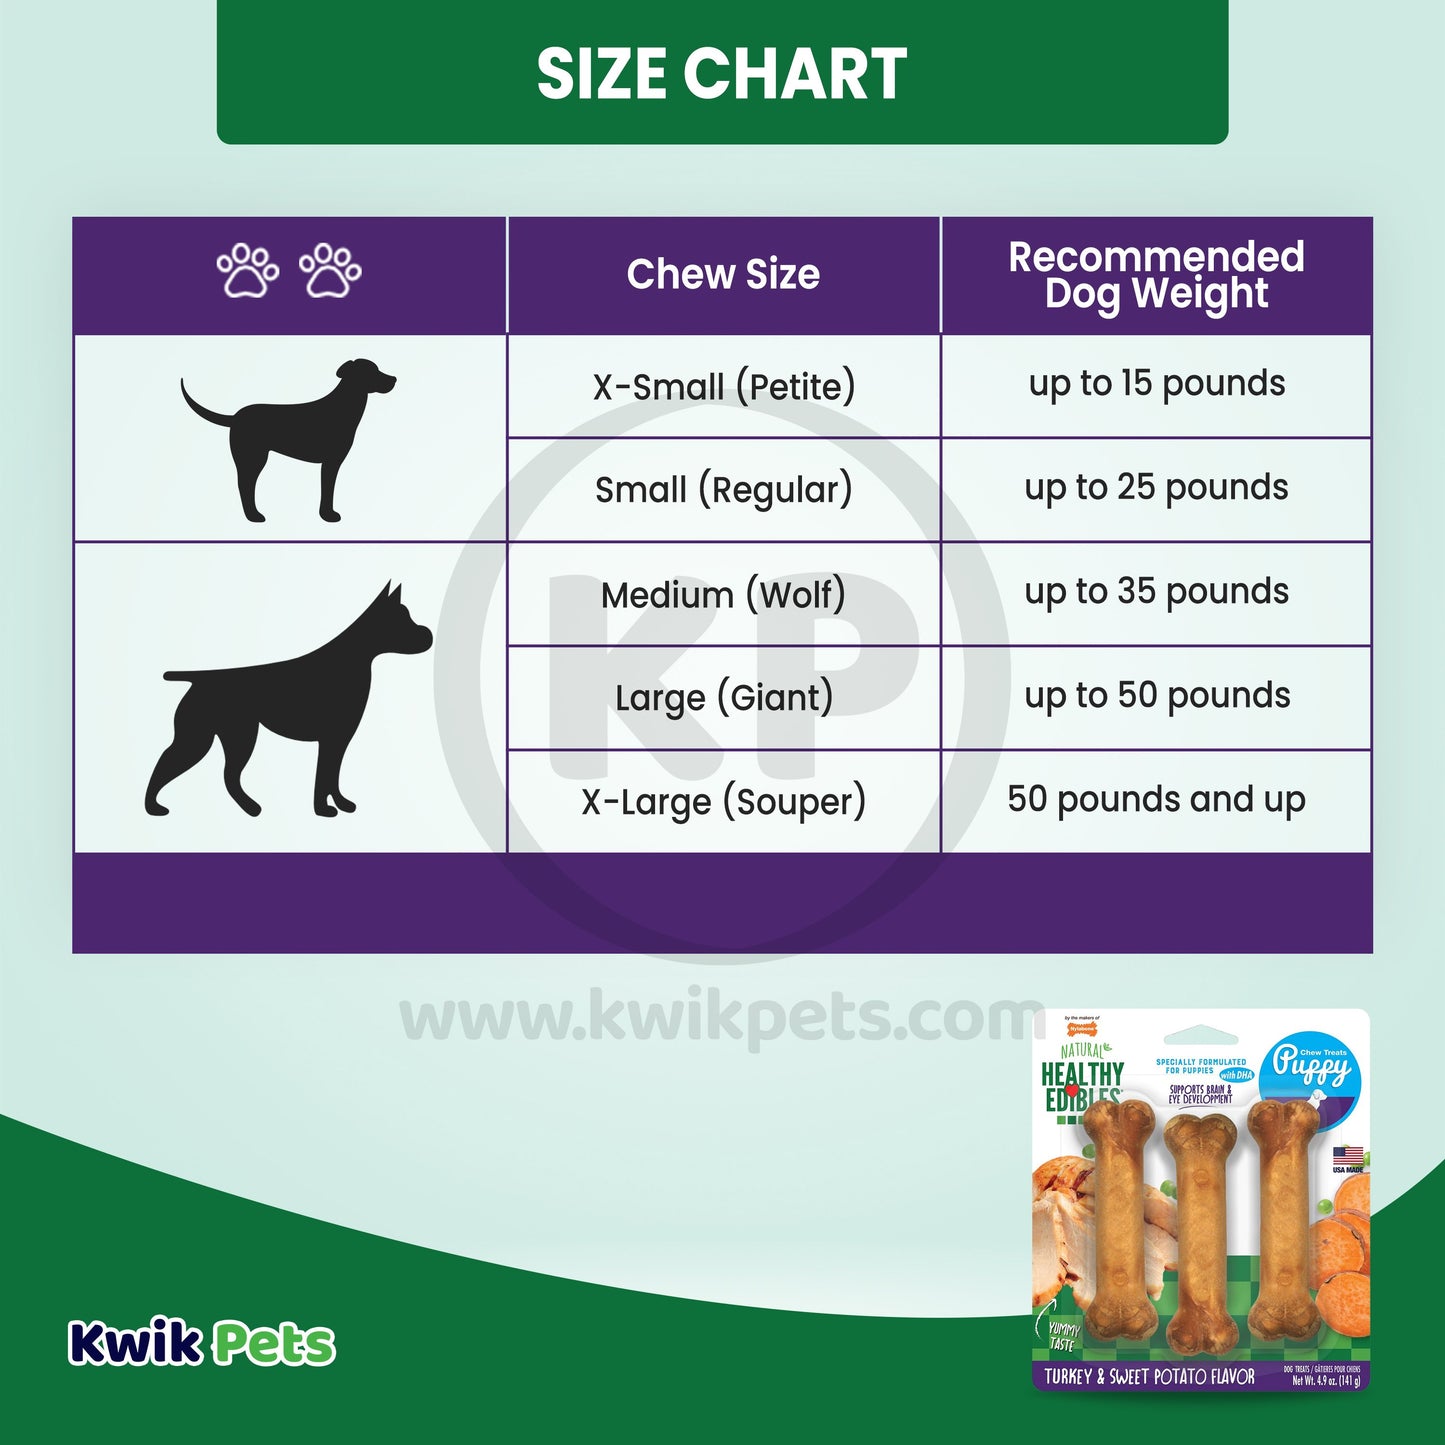 Nylabone Healthy Edibles Puppy Chew Treats 3 count, Small/Regular - Up To 25 lb, Nylabone